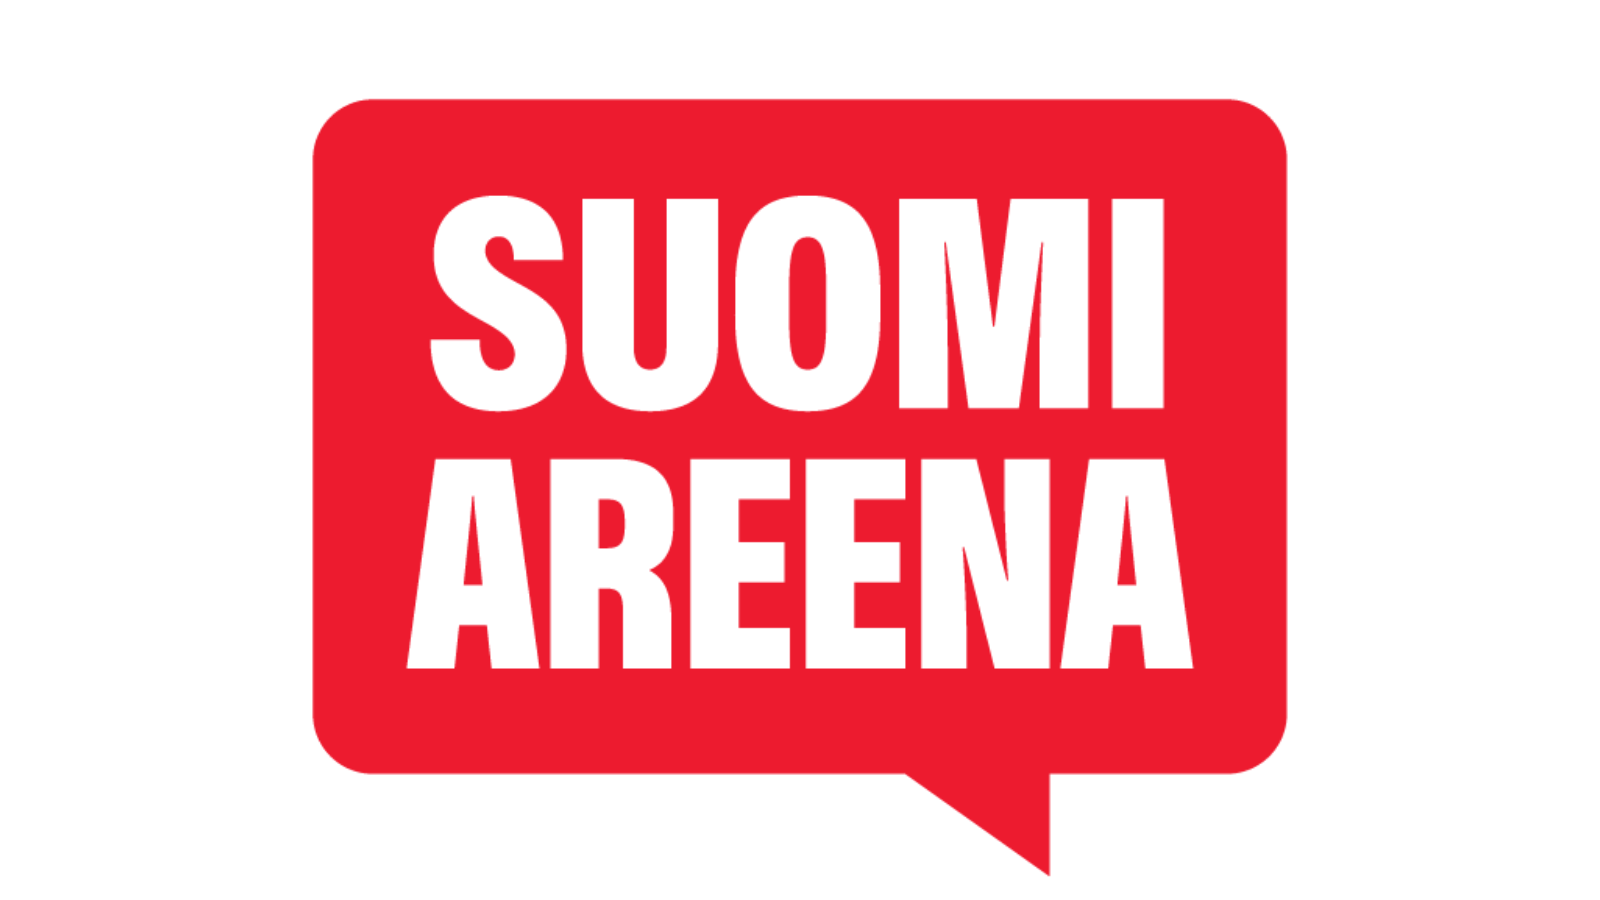 SuomiAreenan logo.